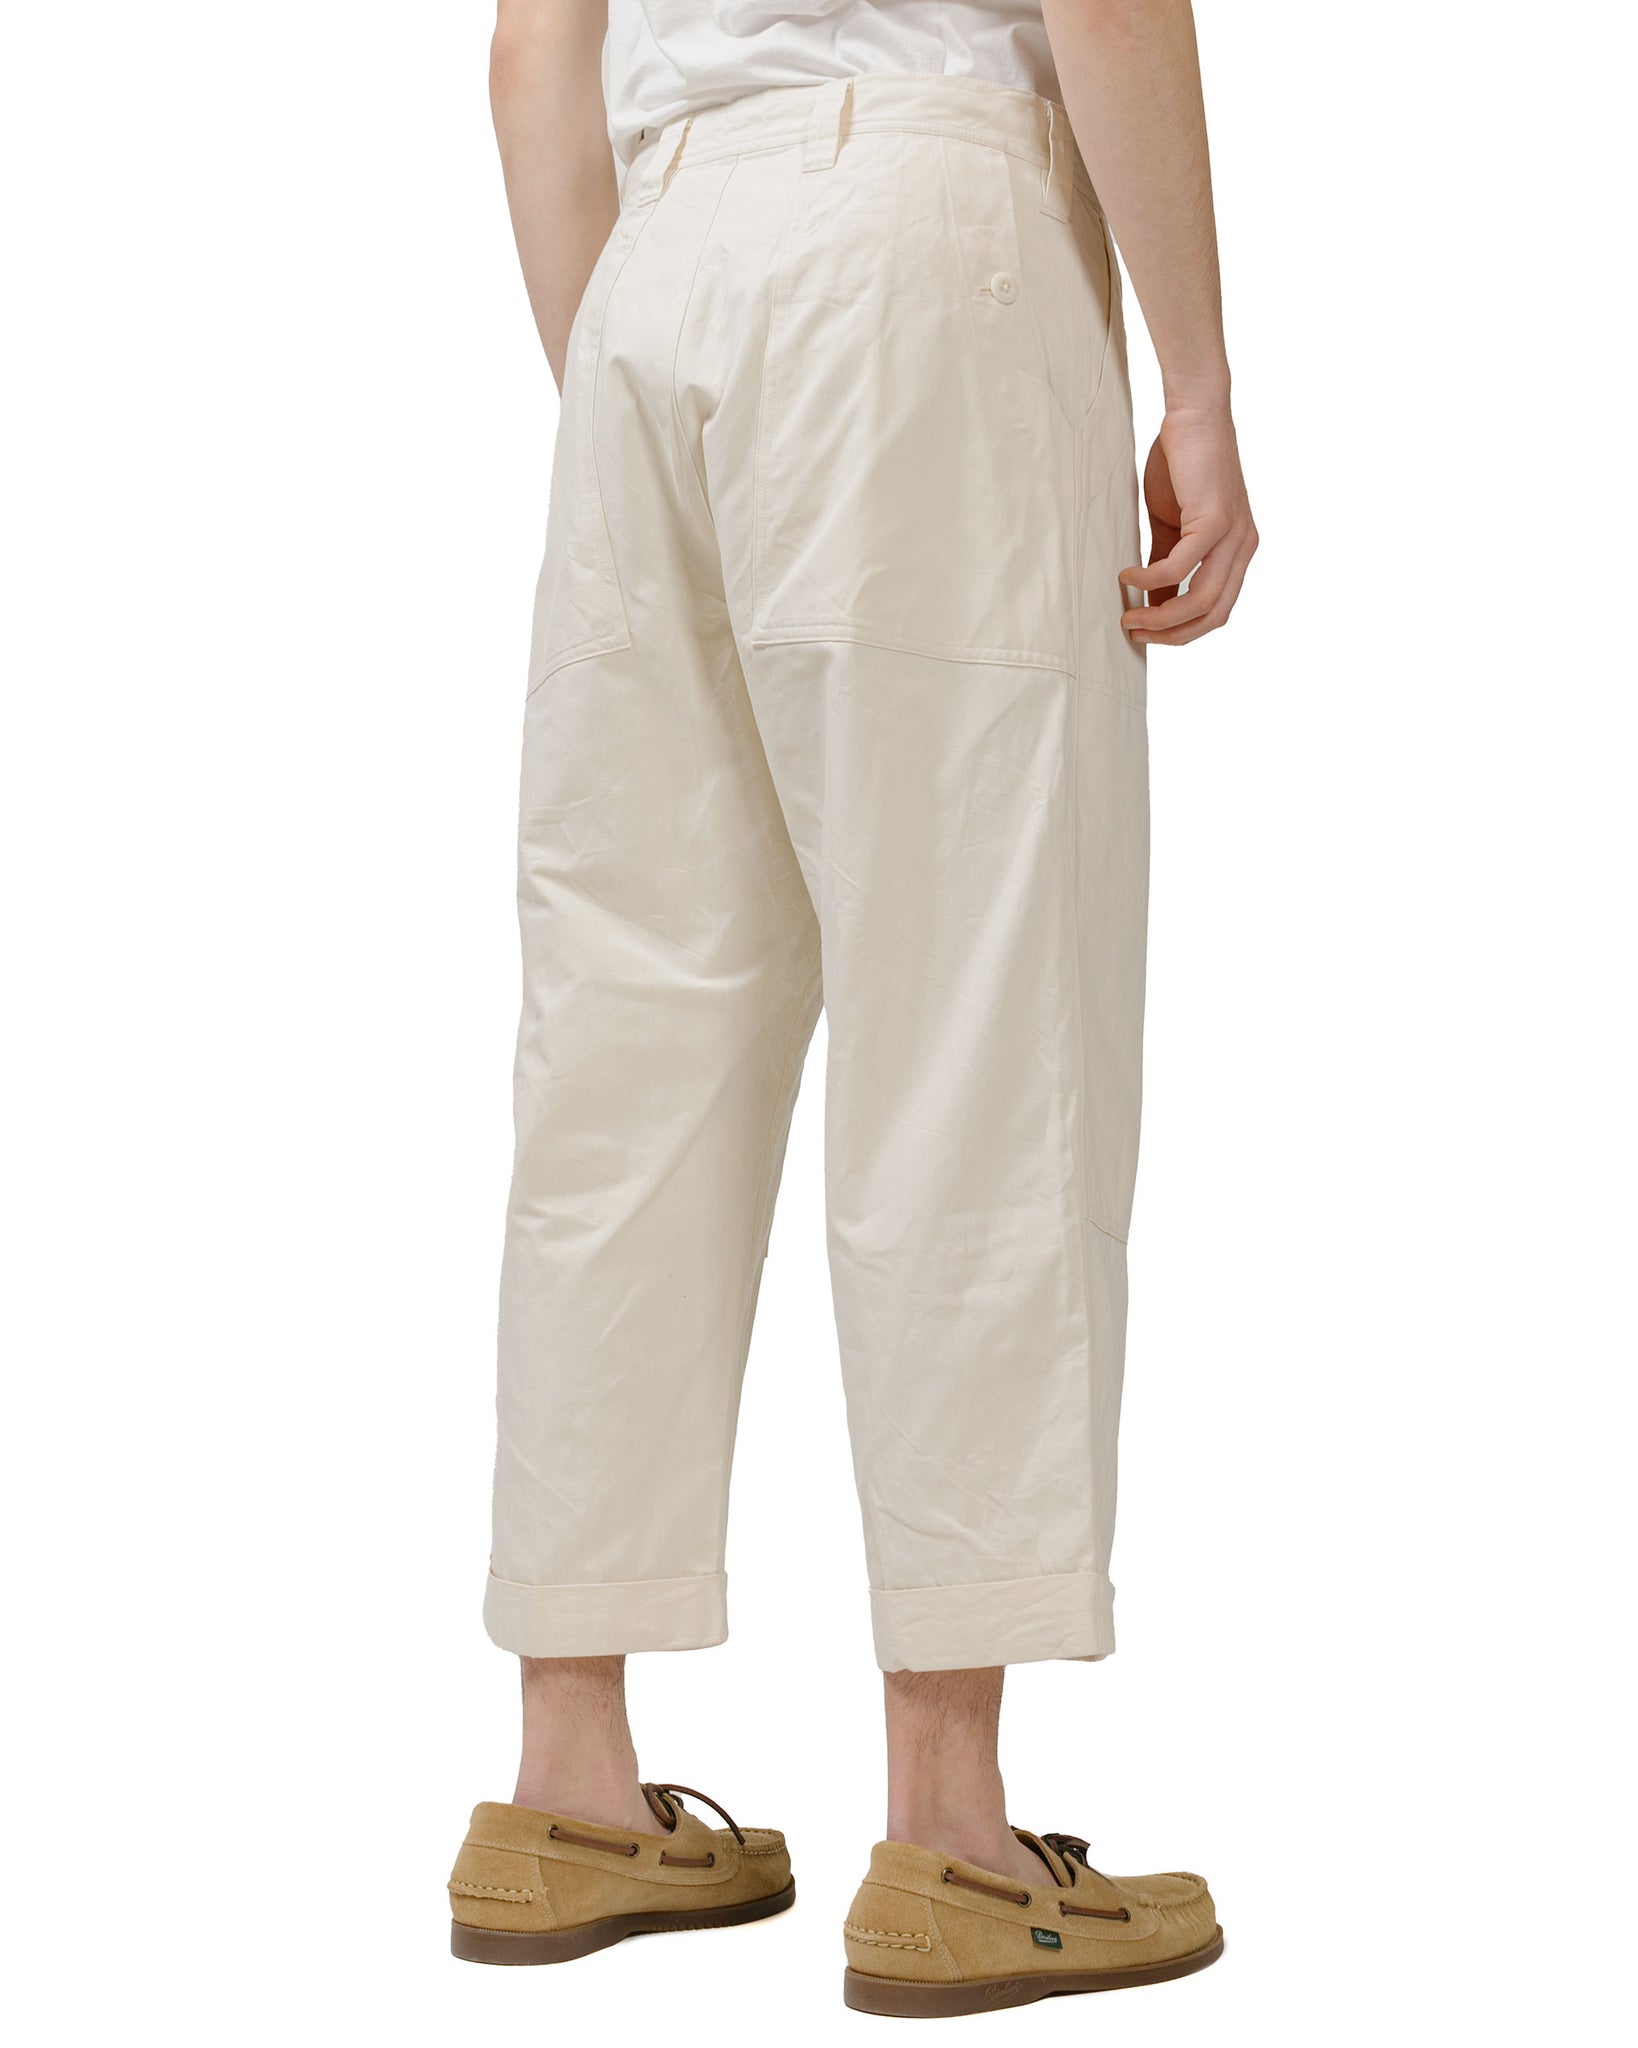 ts(s) Cropped Work Pants Cotton Slub Yarn Twill Cloth Natural model back